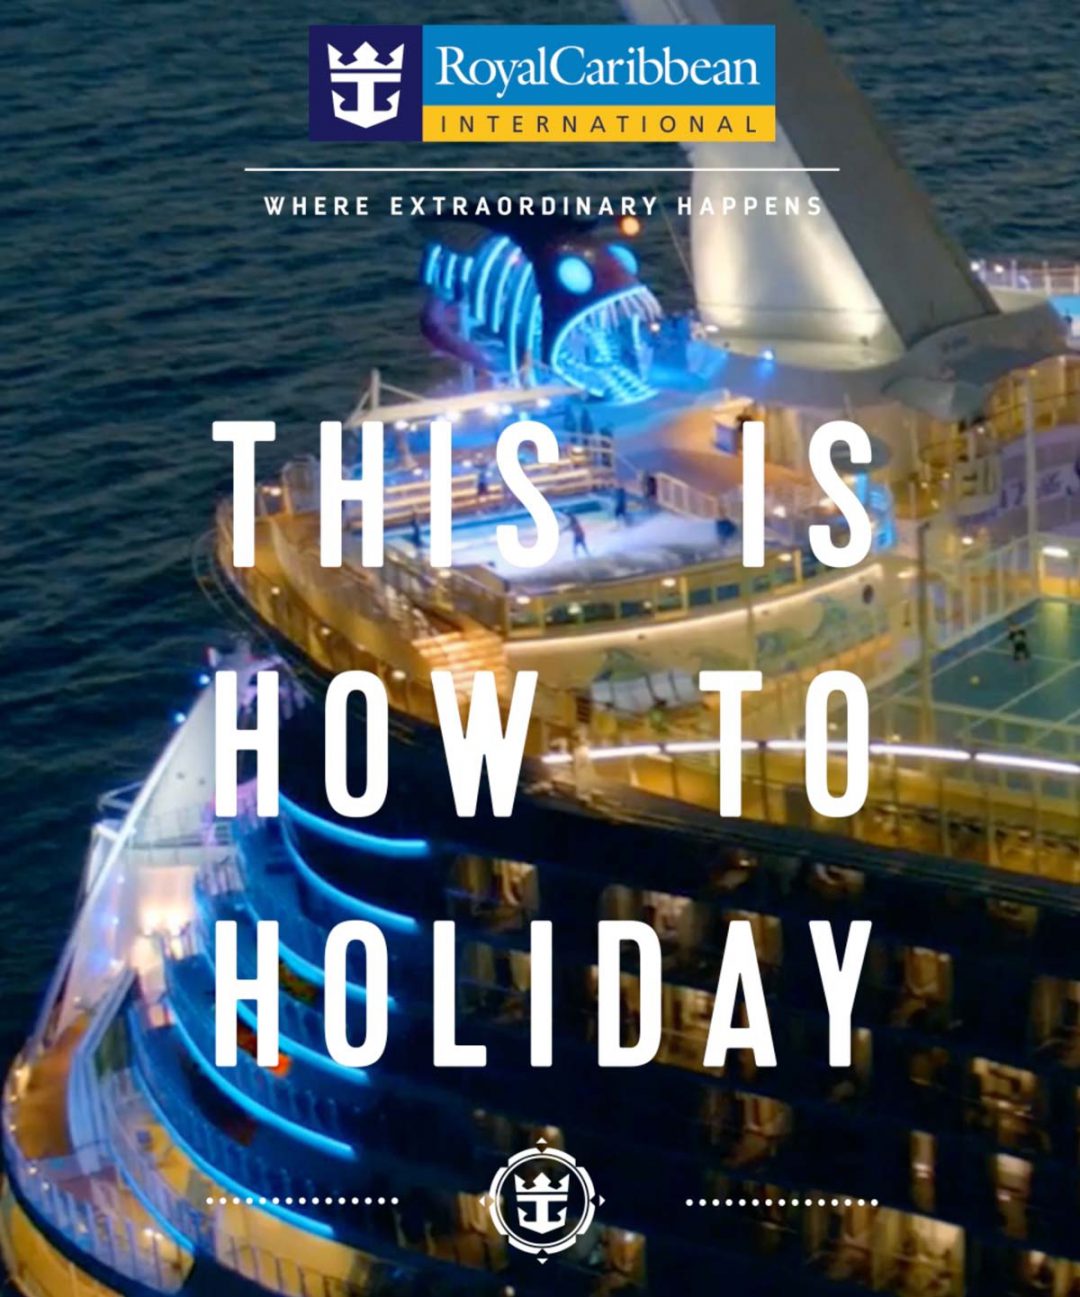 Royal Caribbean – How to Holiday